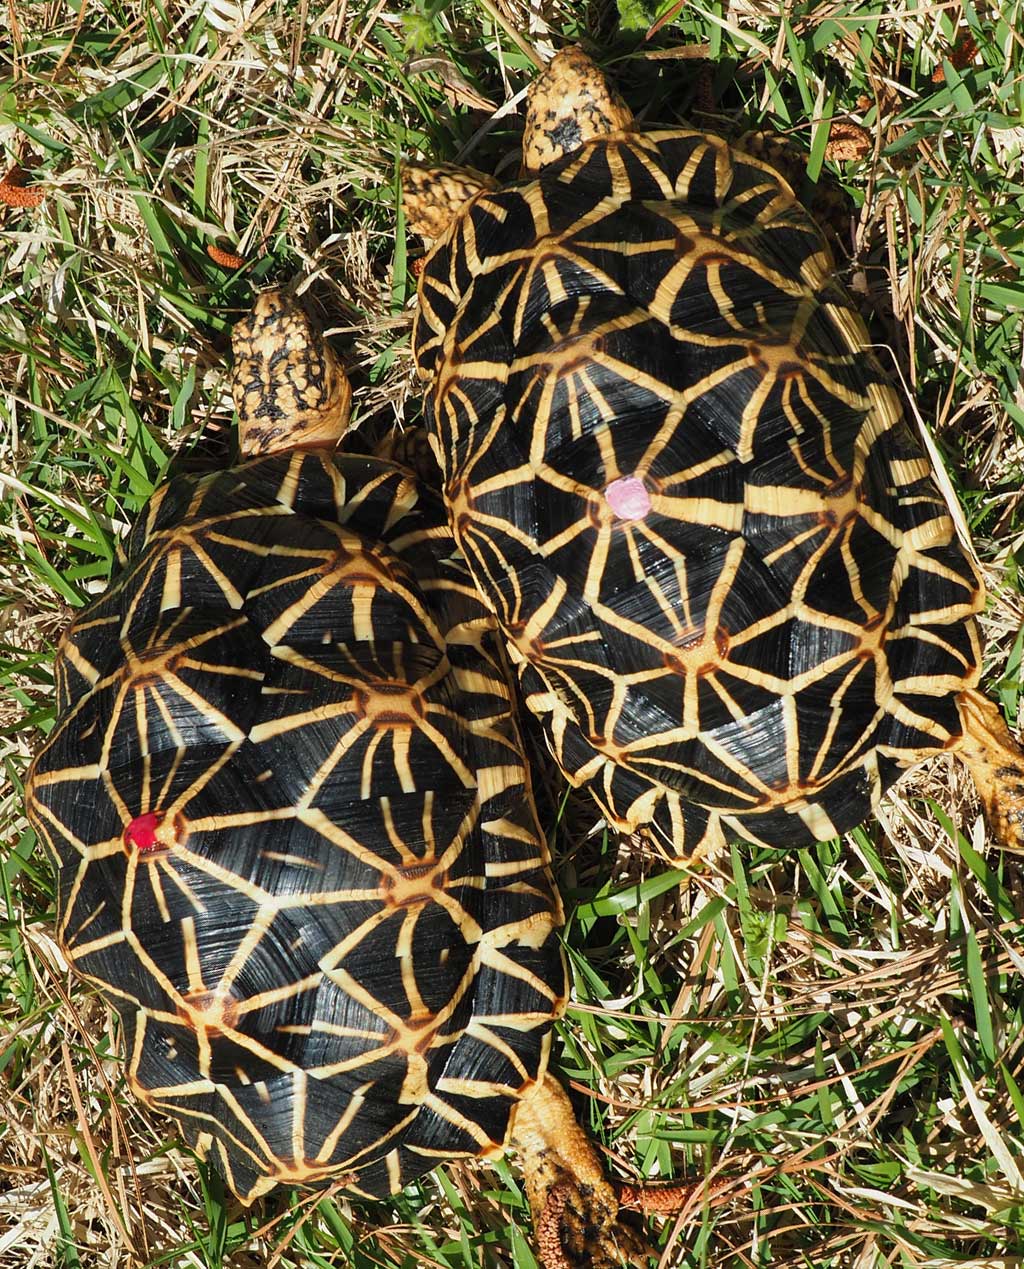 Sri Lankan Star Tortoises